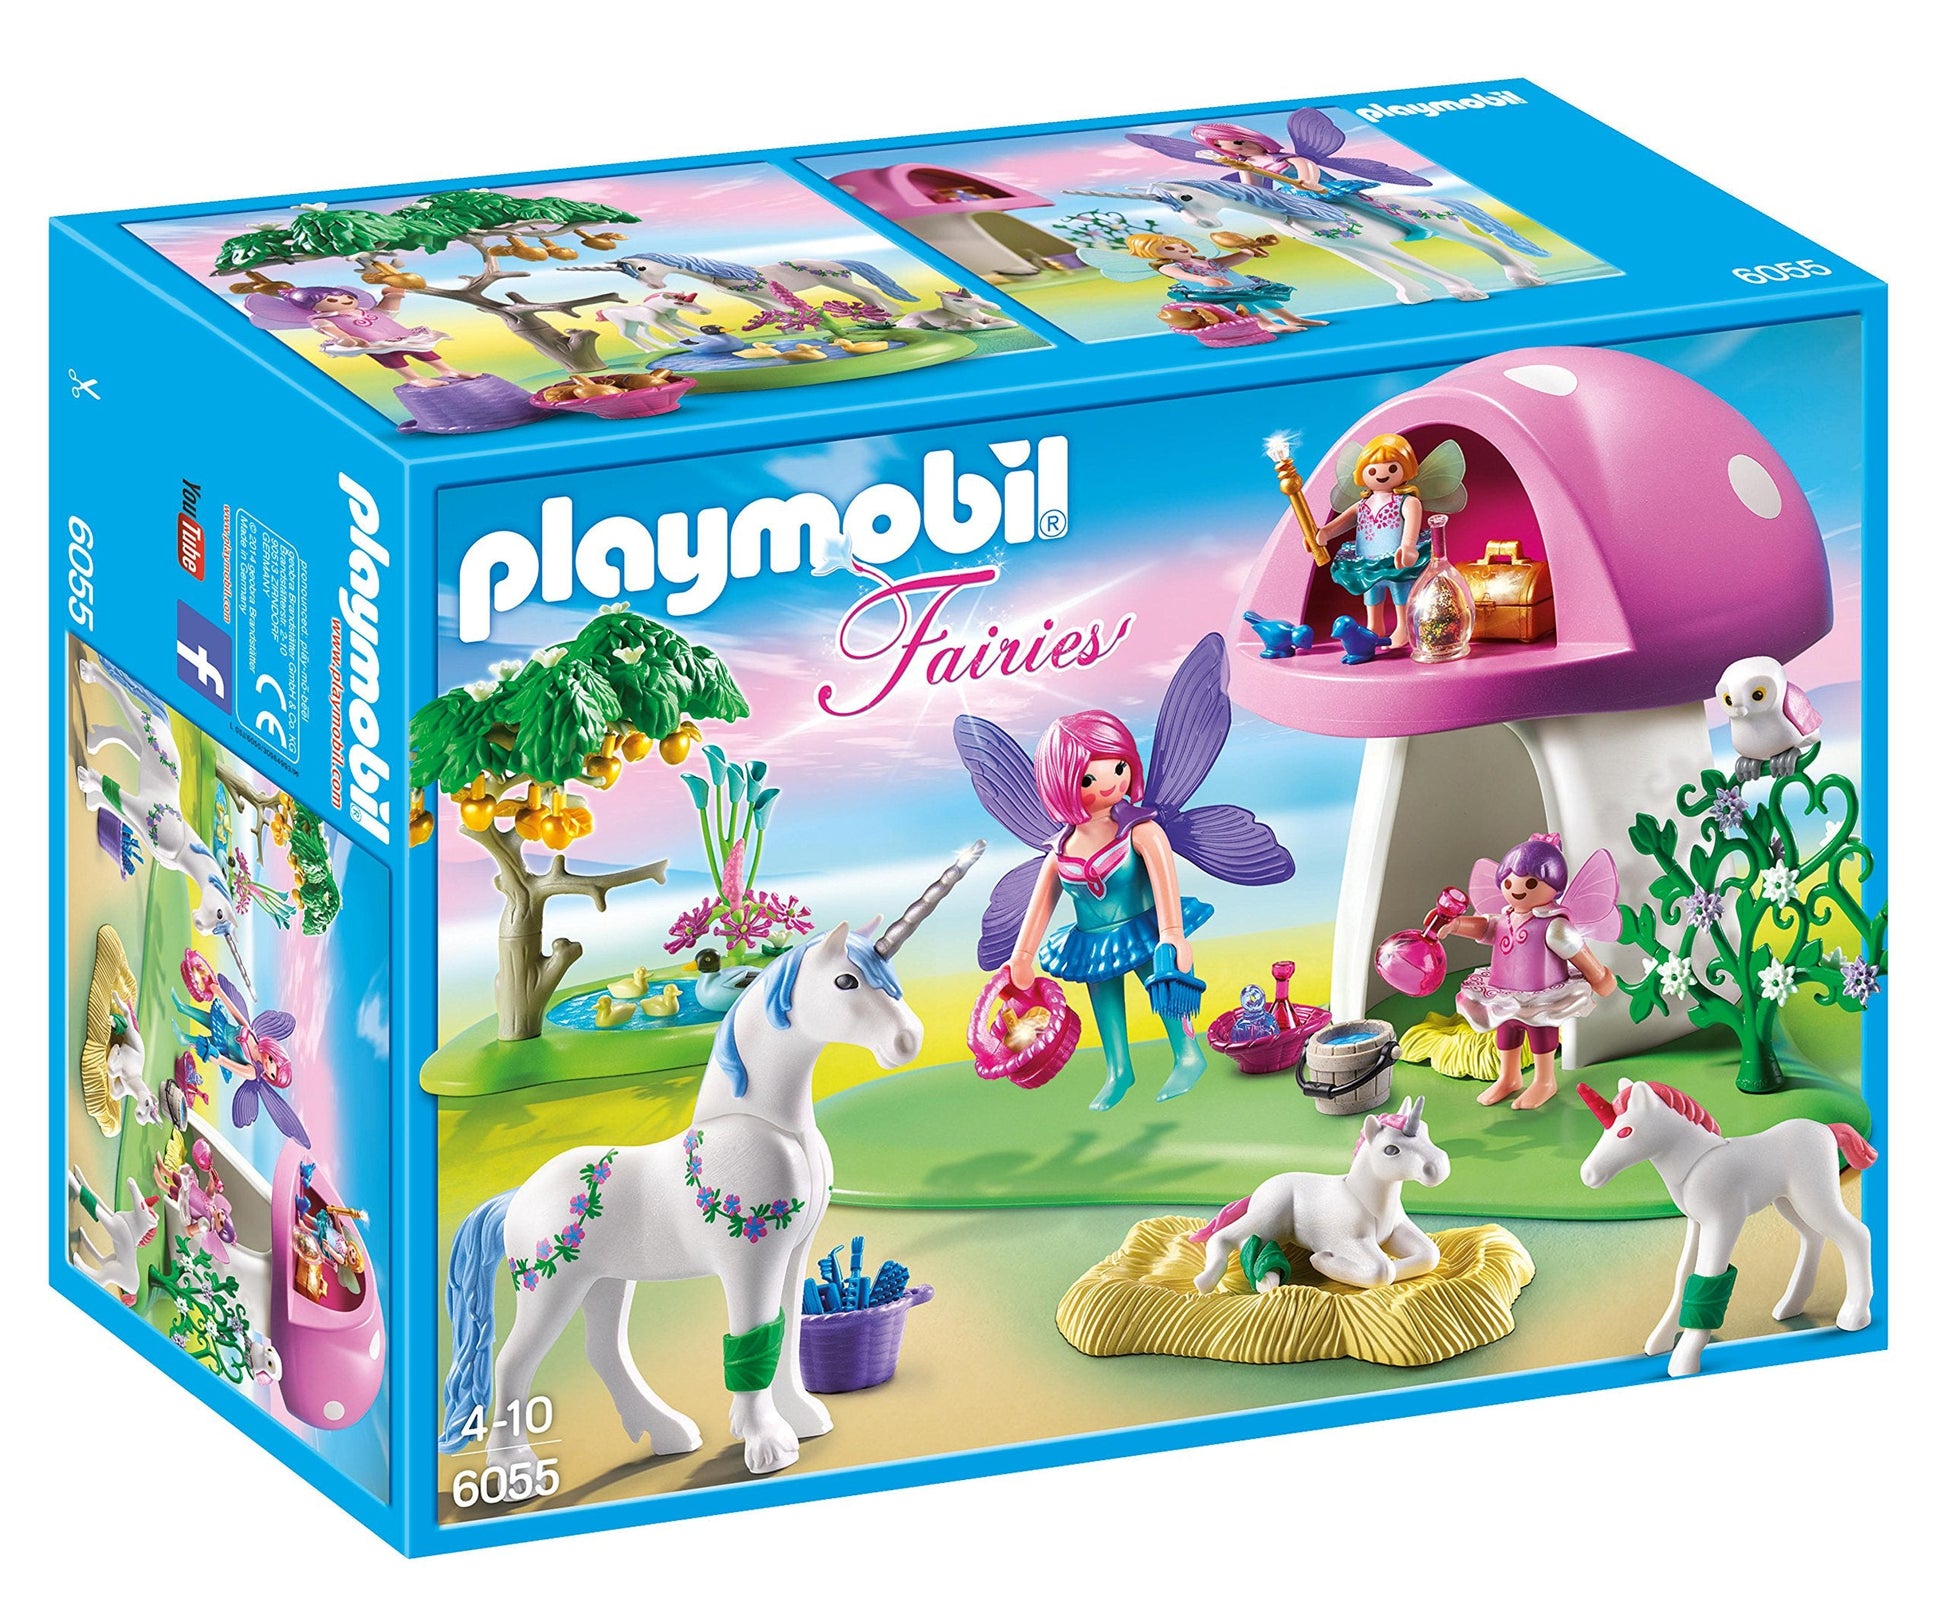 Playmobil 6055 Fairies, Unicorns and Toadstool playset